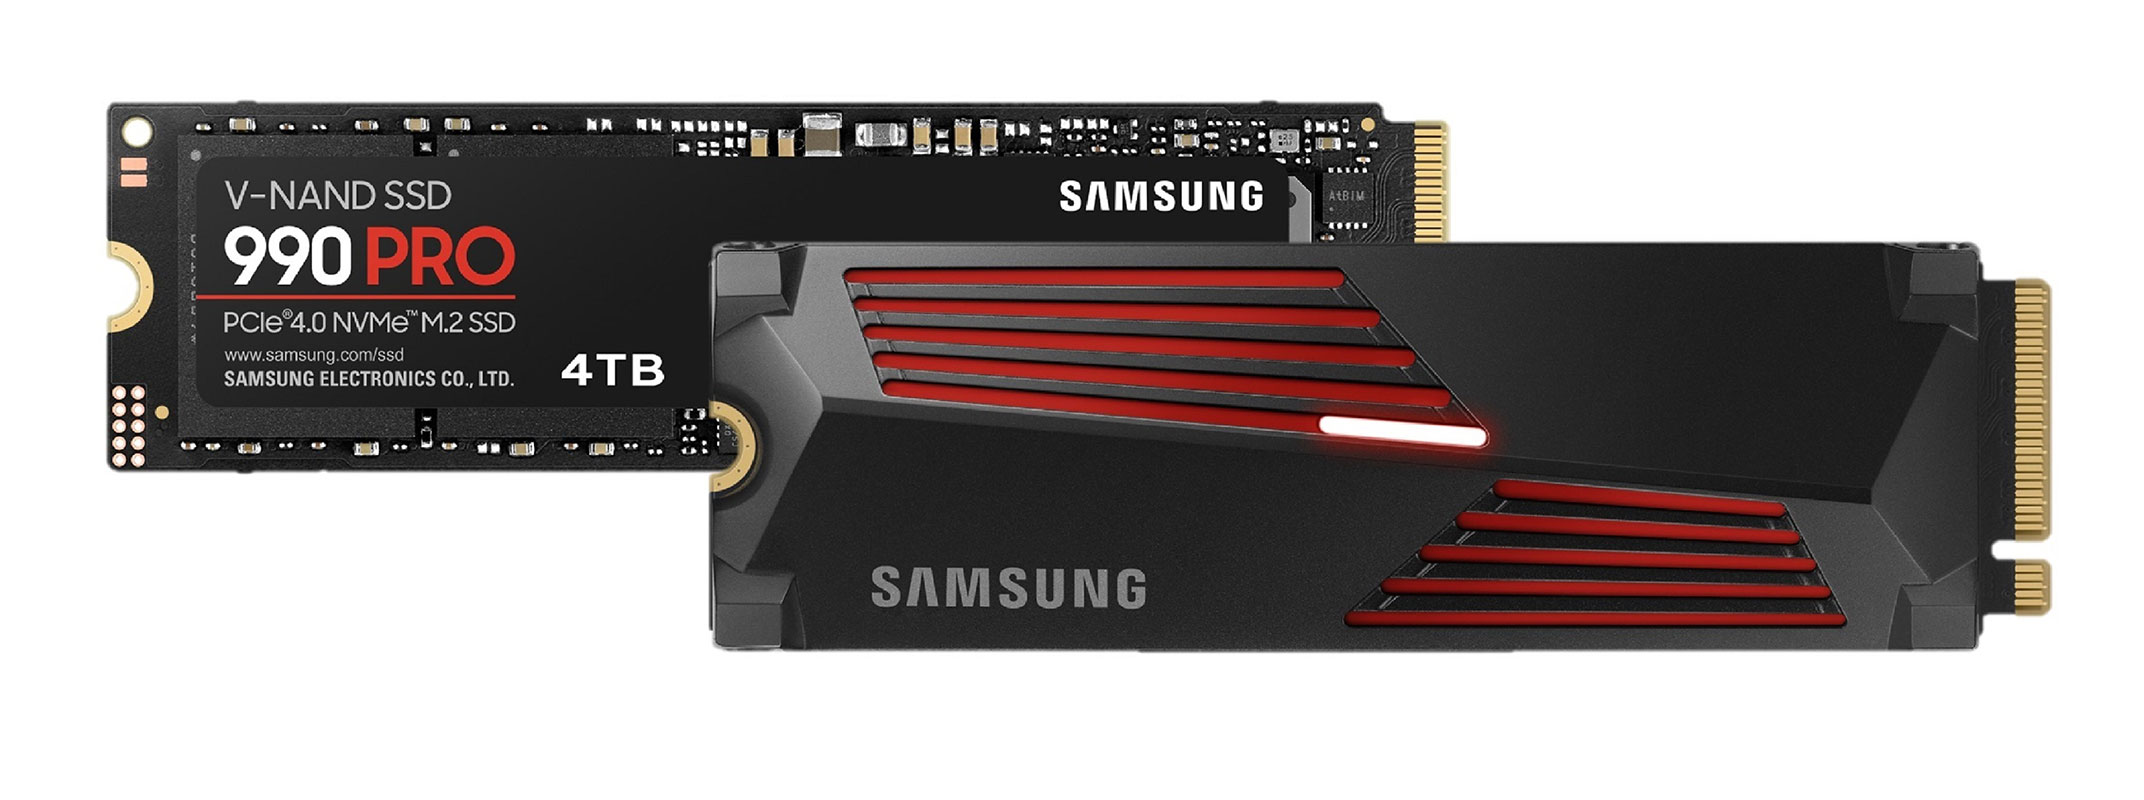 Samsung 990 Pro SSD Internal